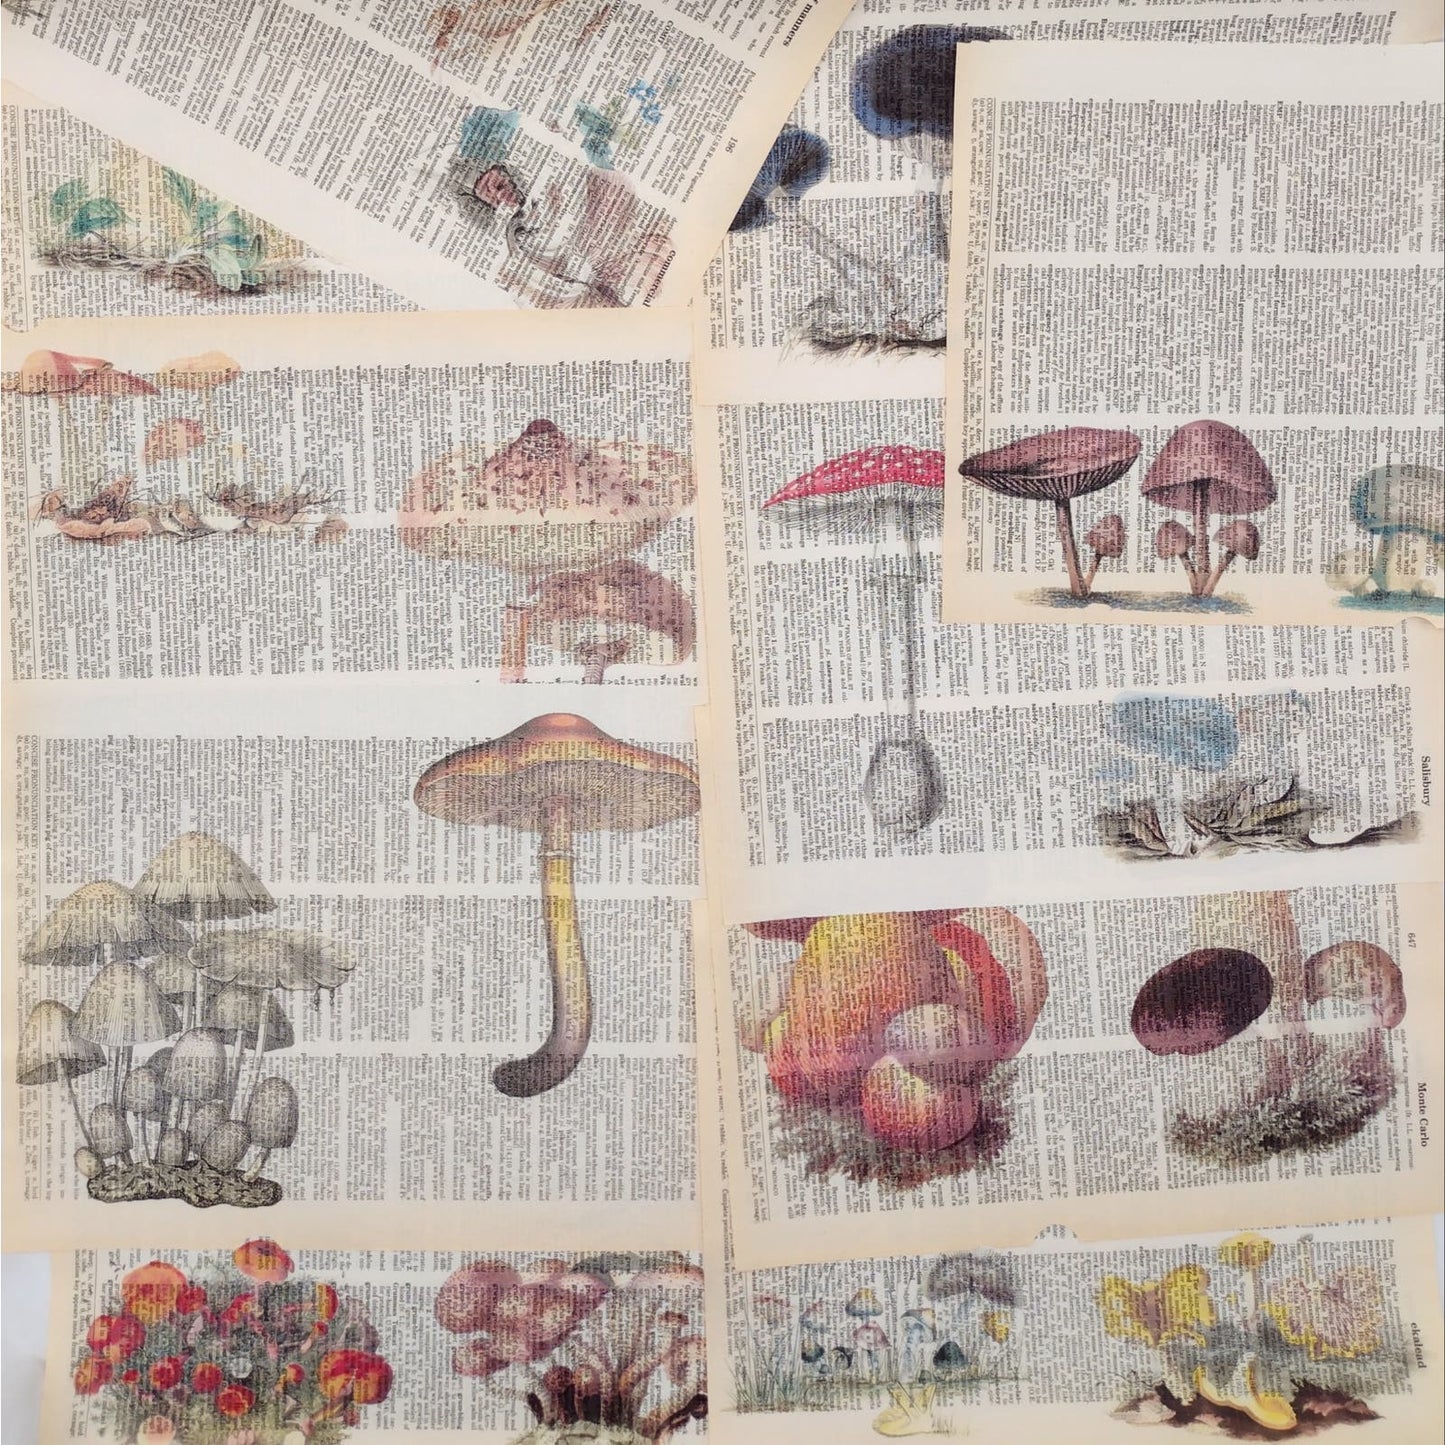 Mushroom Dictionary Prints, Colorful Mushroom Prints, Book Page Prints